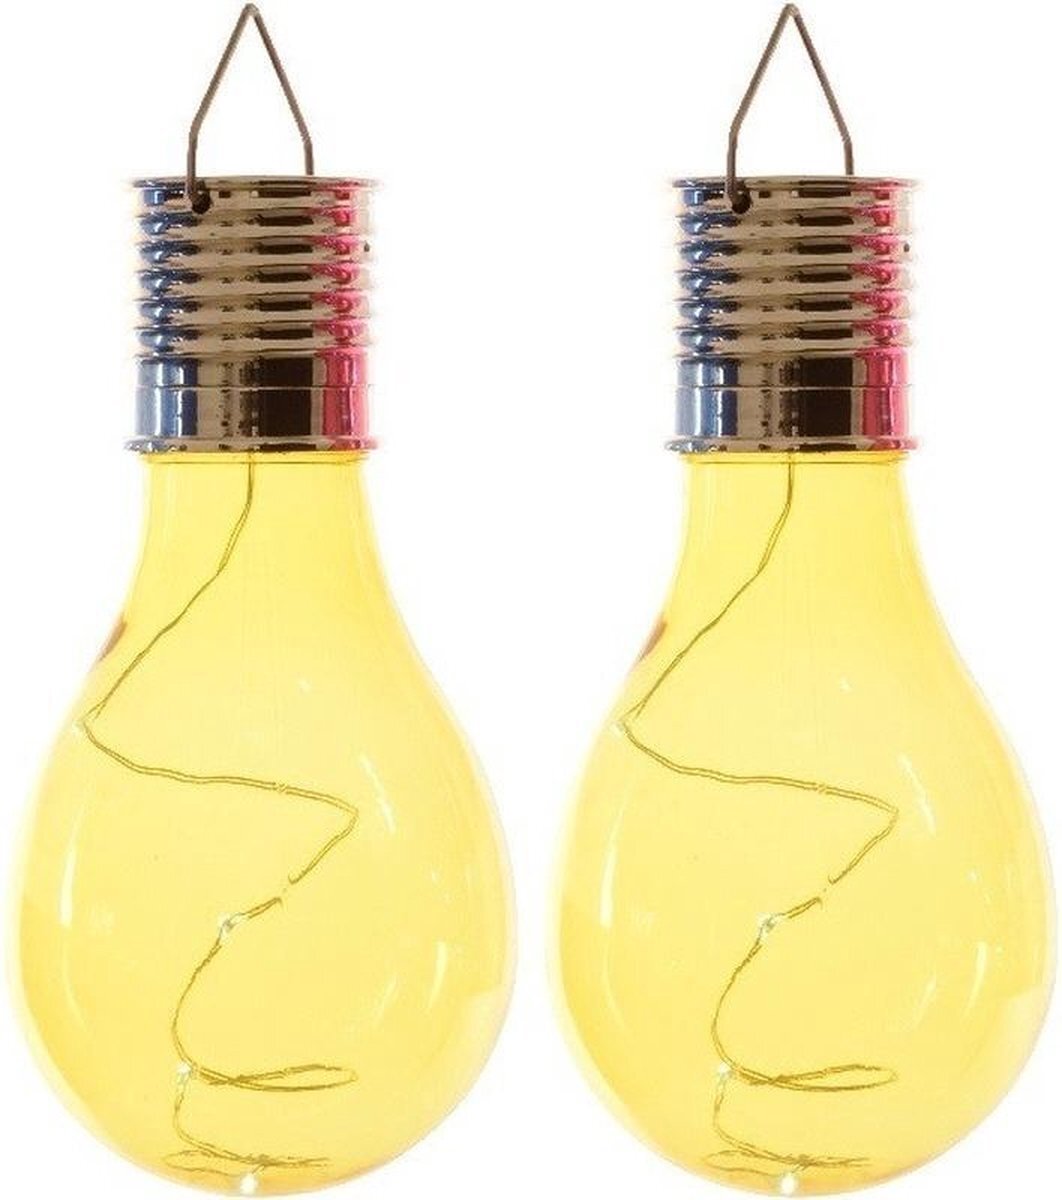 Lumineo 2x Buiten/tuin LED geel lampbolletje/peertje solar verlichting 14 cm - Tuinverlichting - Tuinlampen - Solarlampen zonne-energie